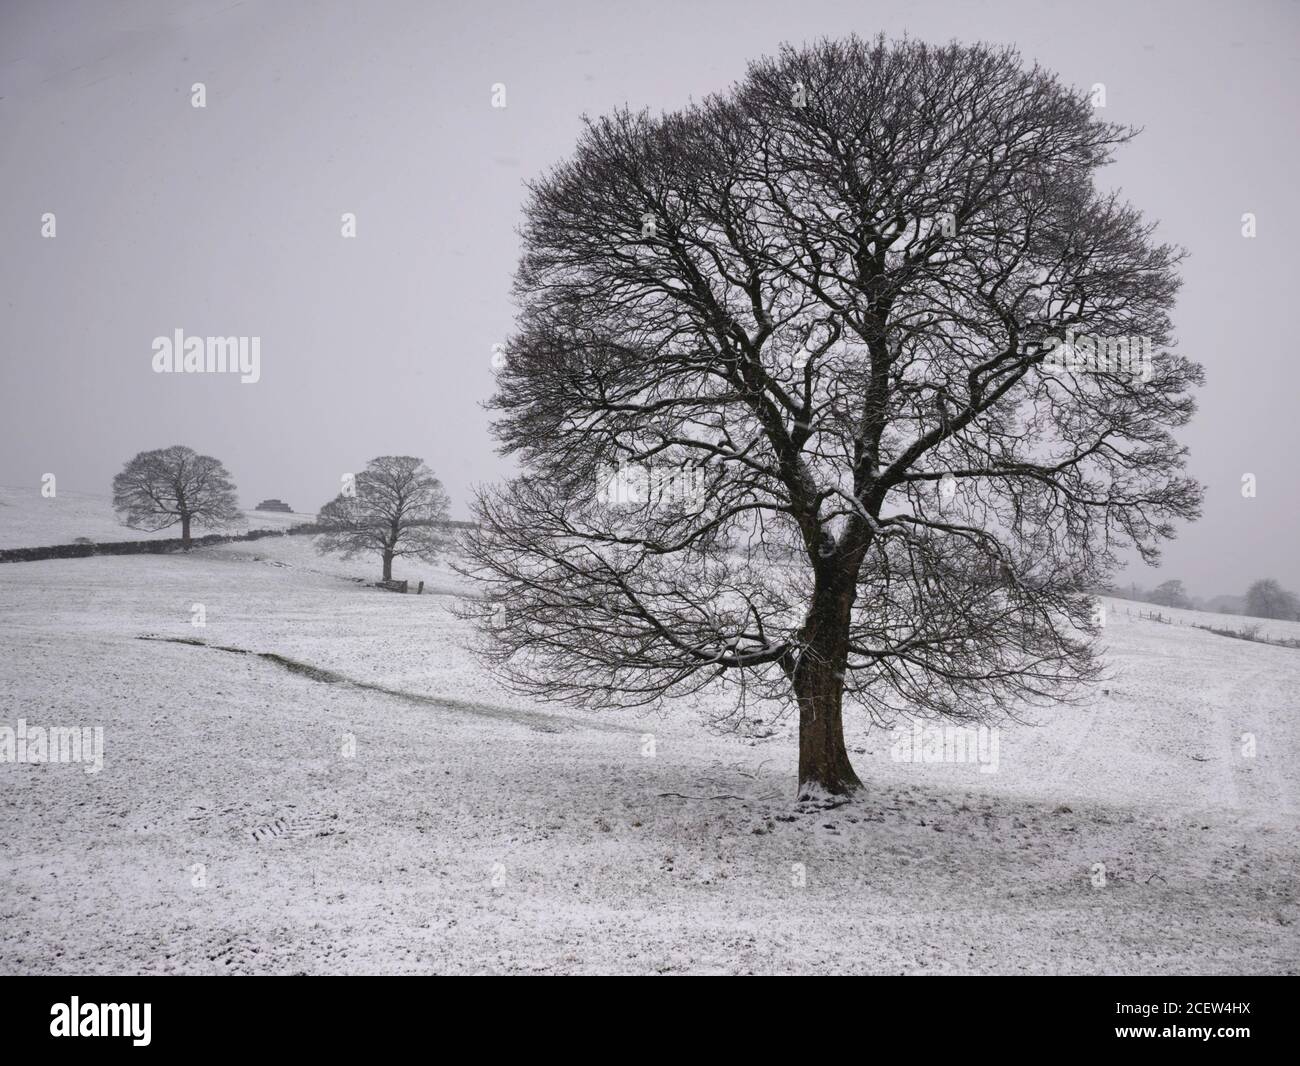 A snowy scene Hill Lane, Burnley, Lancashire. Winter. Stock Photo